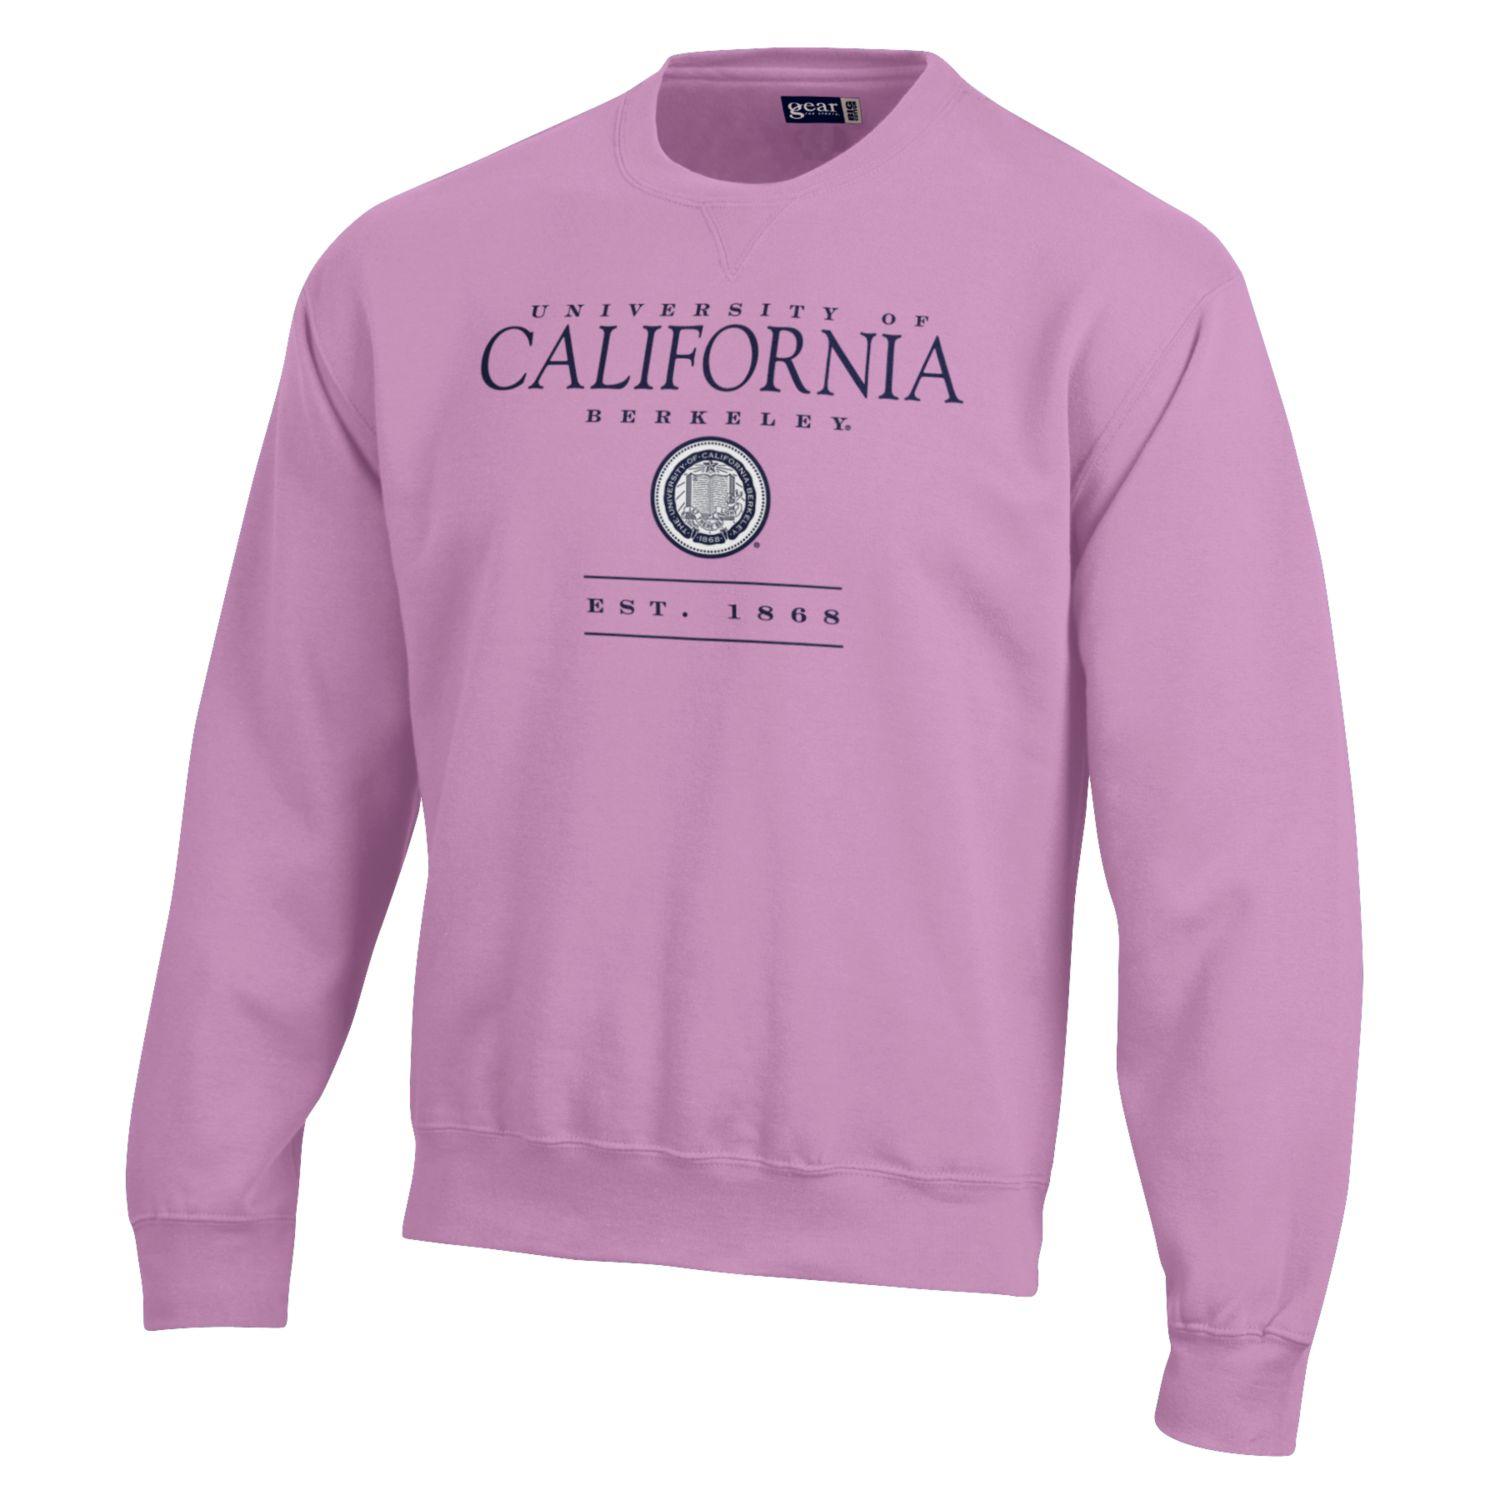 University of California Berkeley over seal Big cotton crew neck sweatshirt- Lavender-Shop College Wear